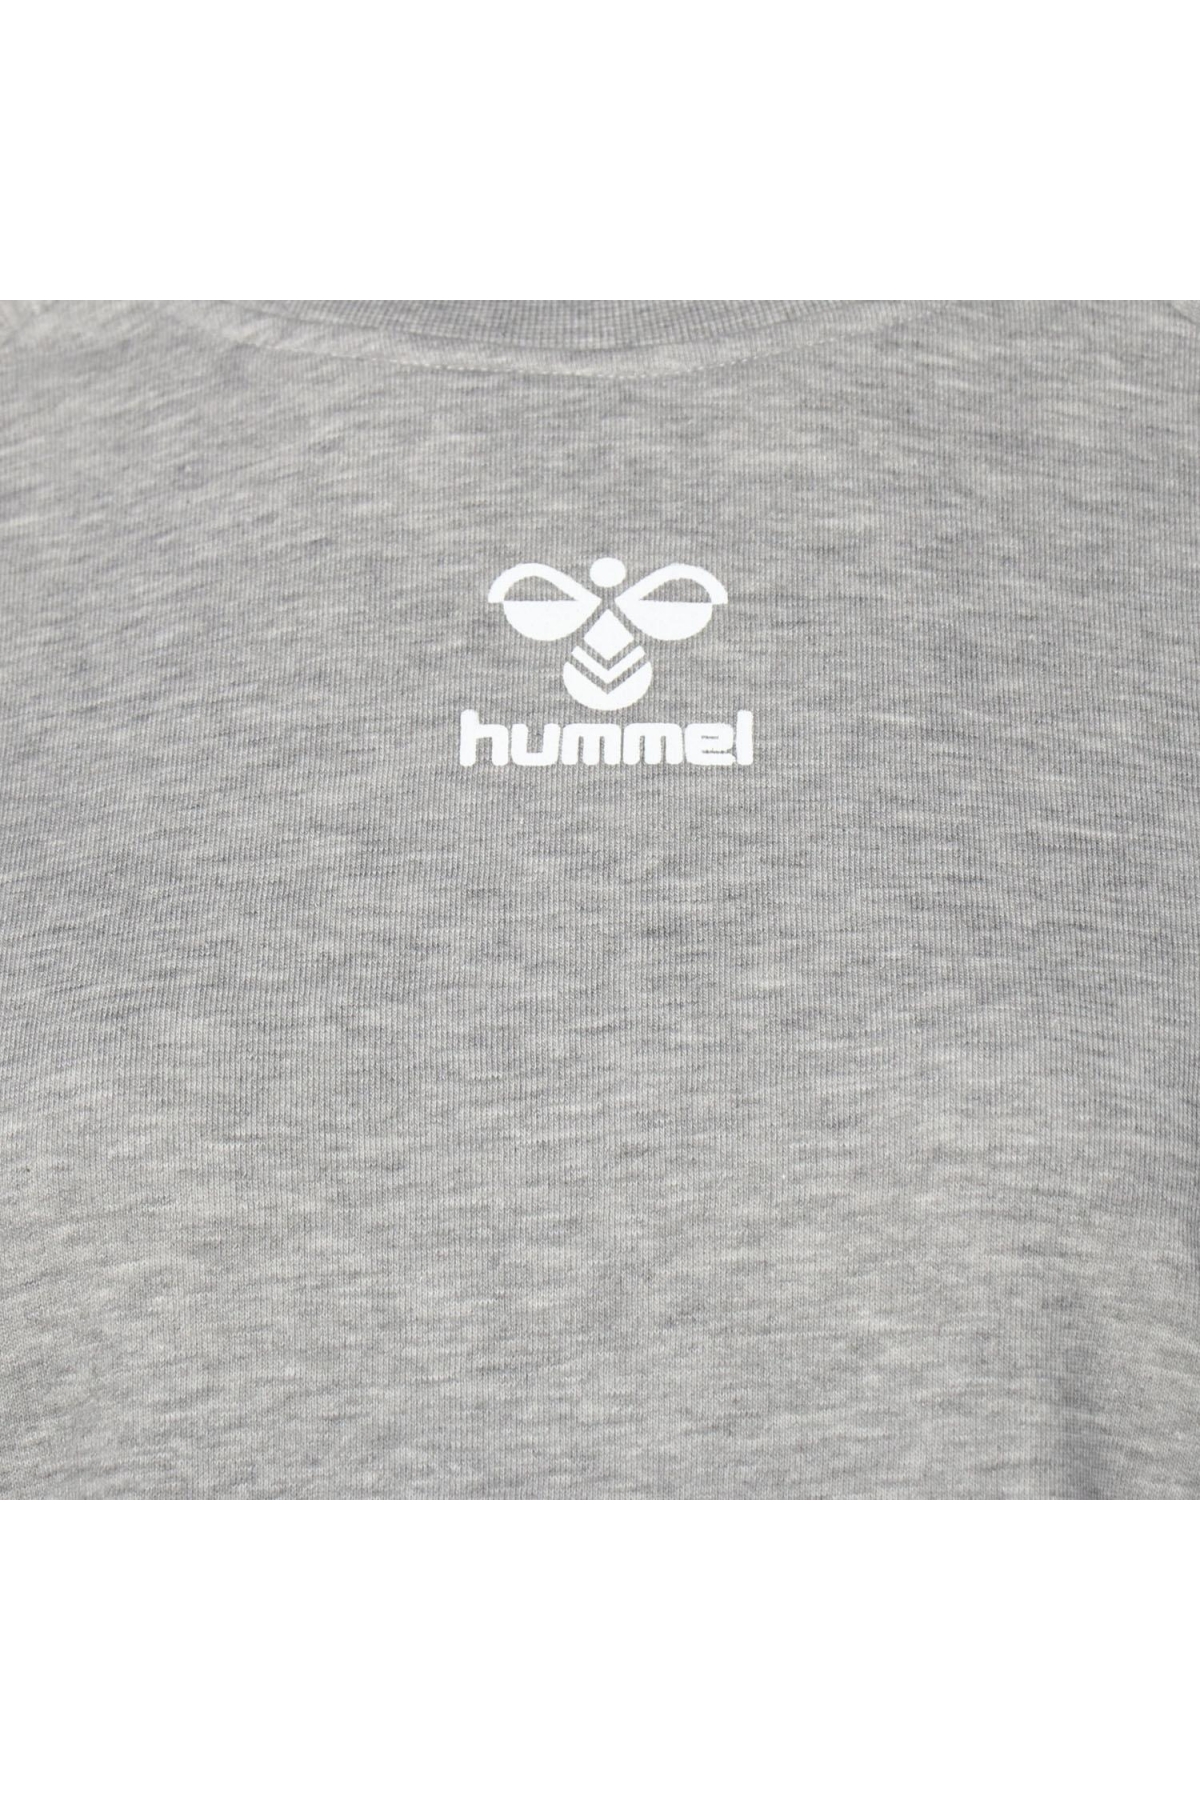 Hummel 921696-2006 It-Icons Woman Kadın Sweatshirt 200981532 | Flo